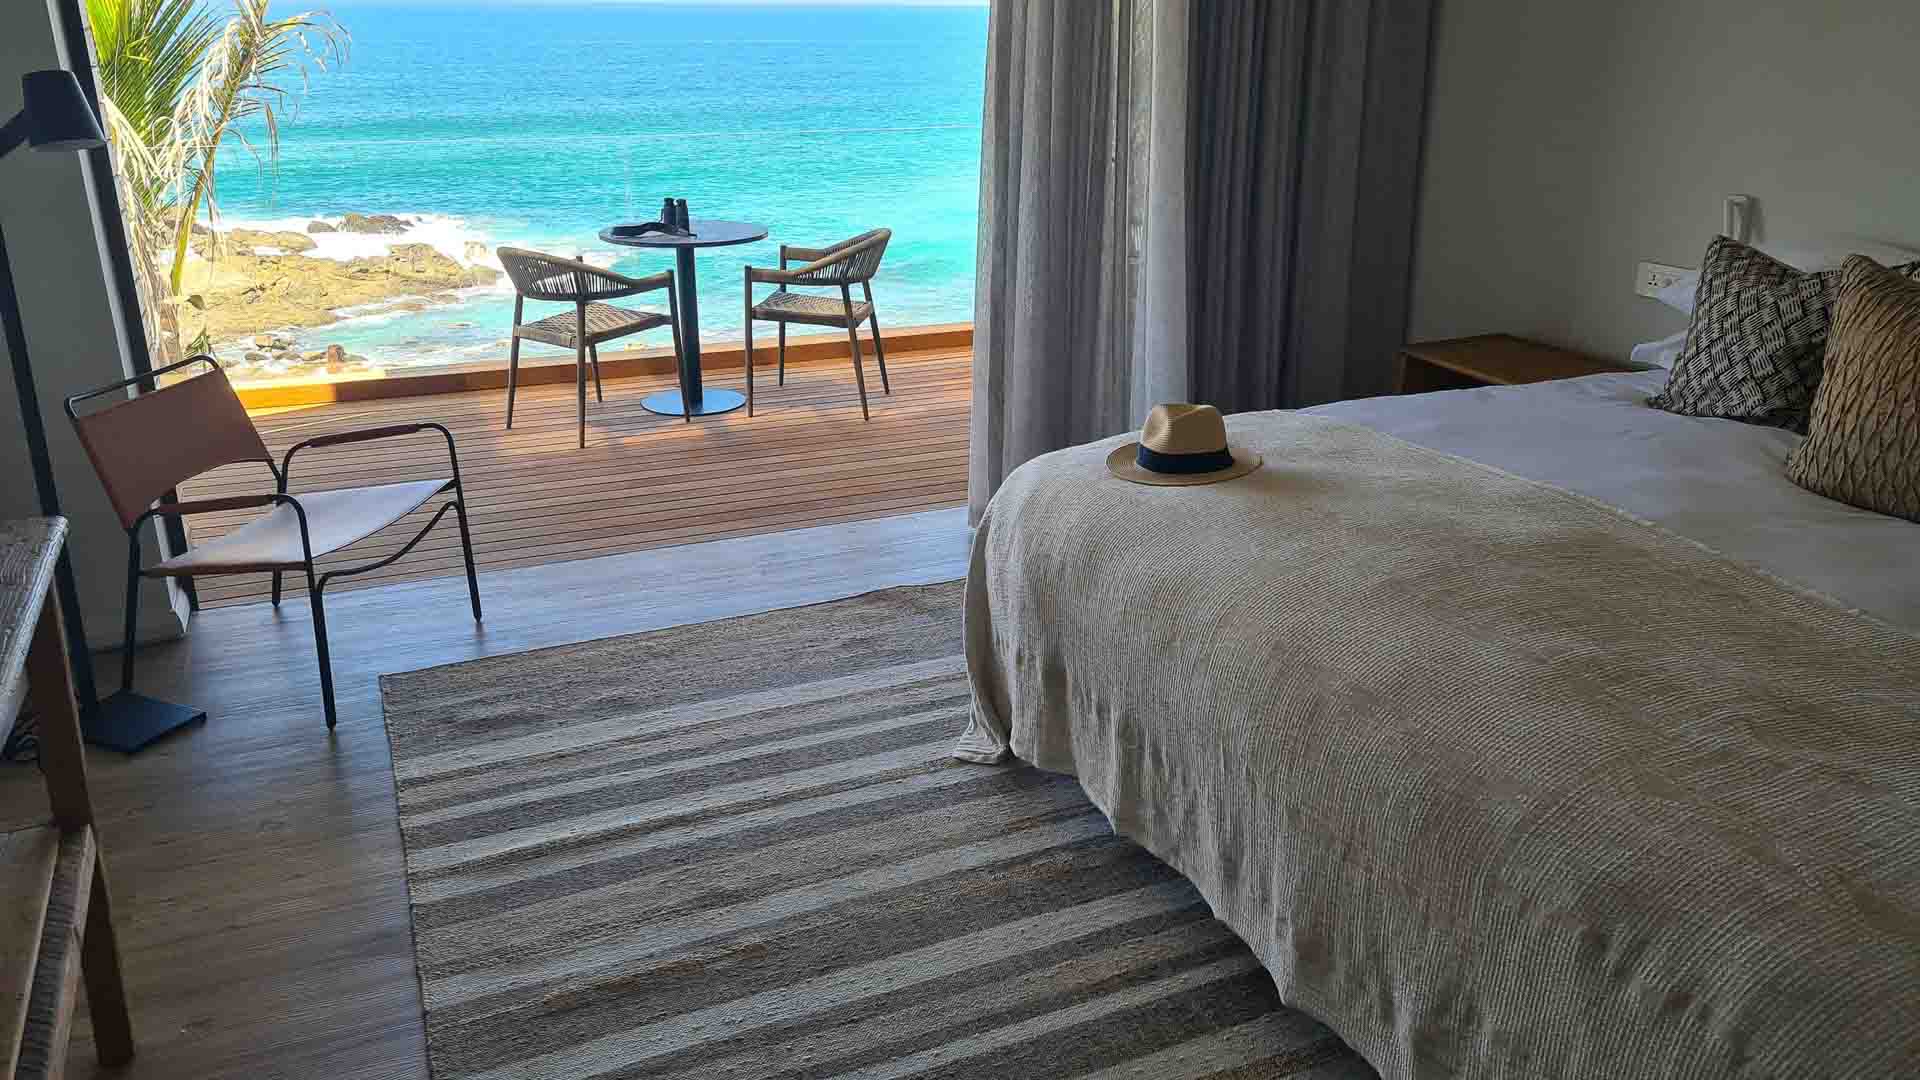 An ocean view room at the popular Ballito hotel, Sala Beach House.